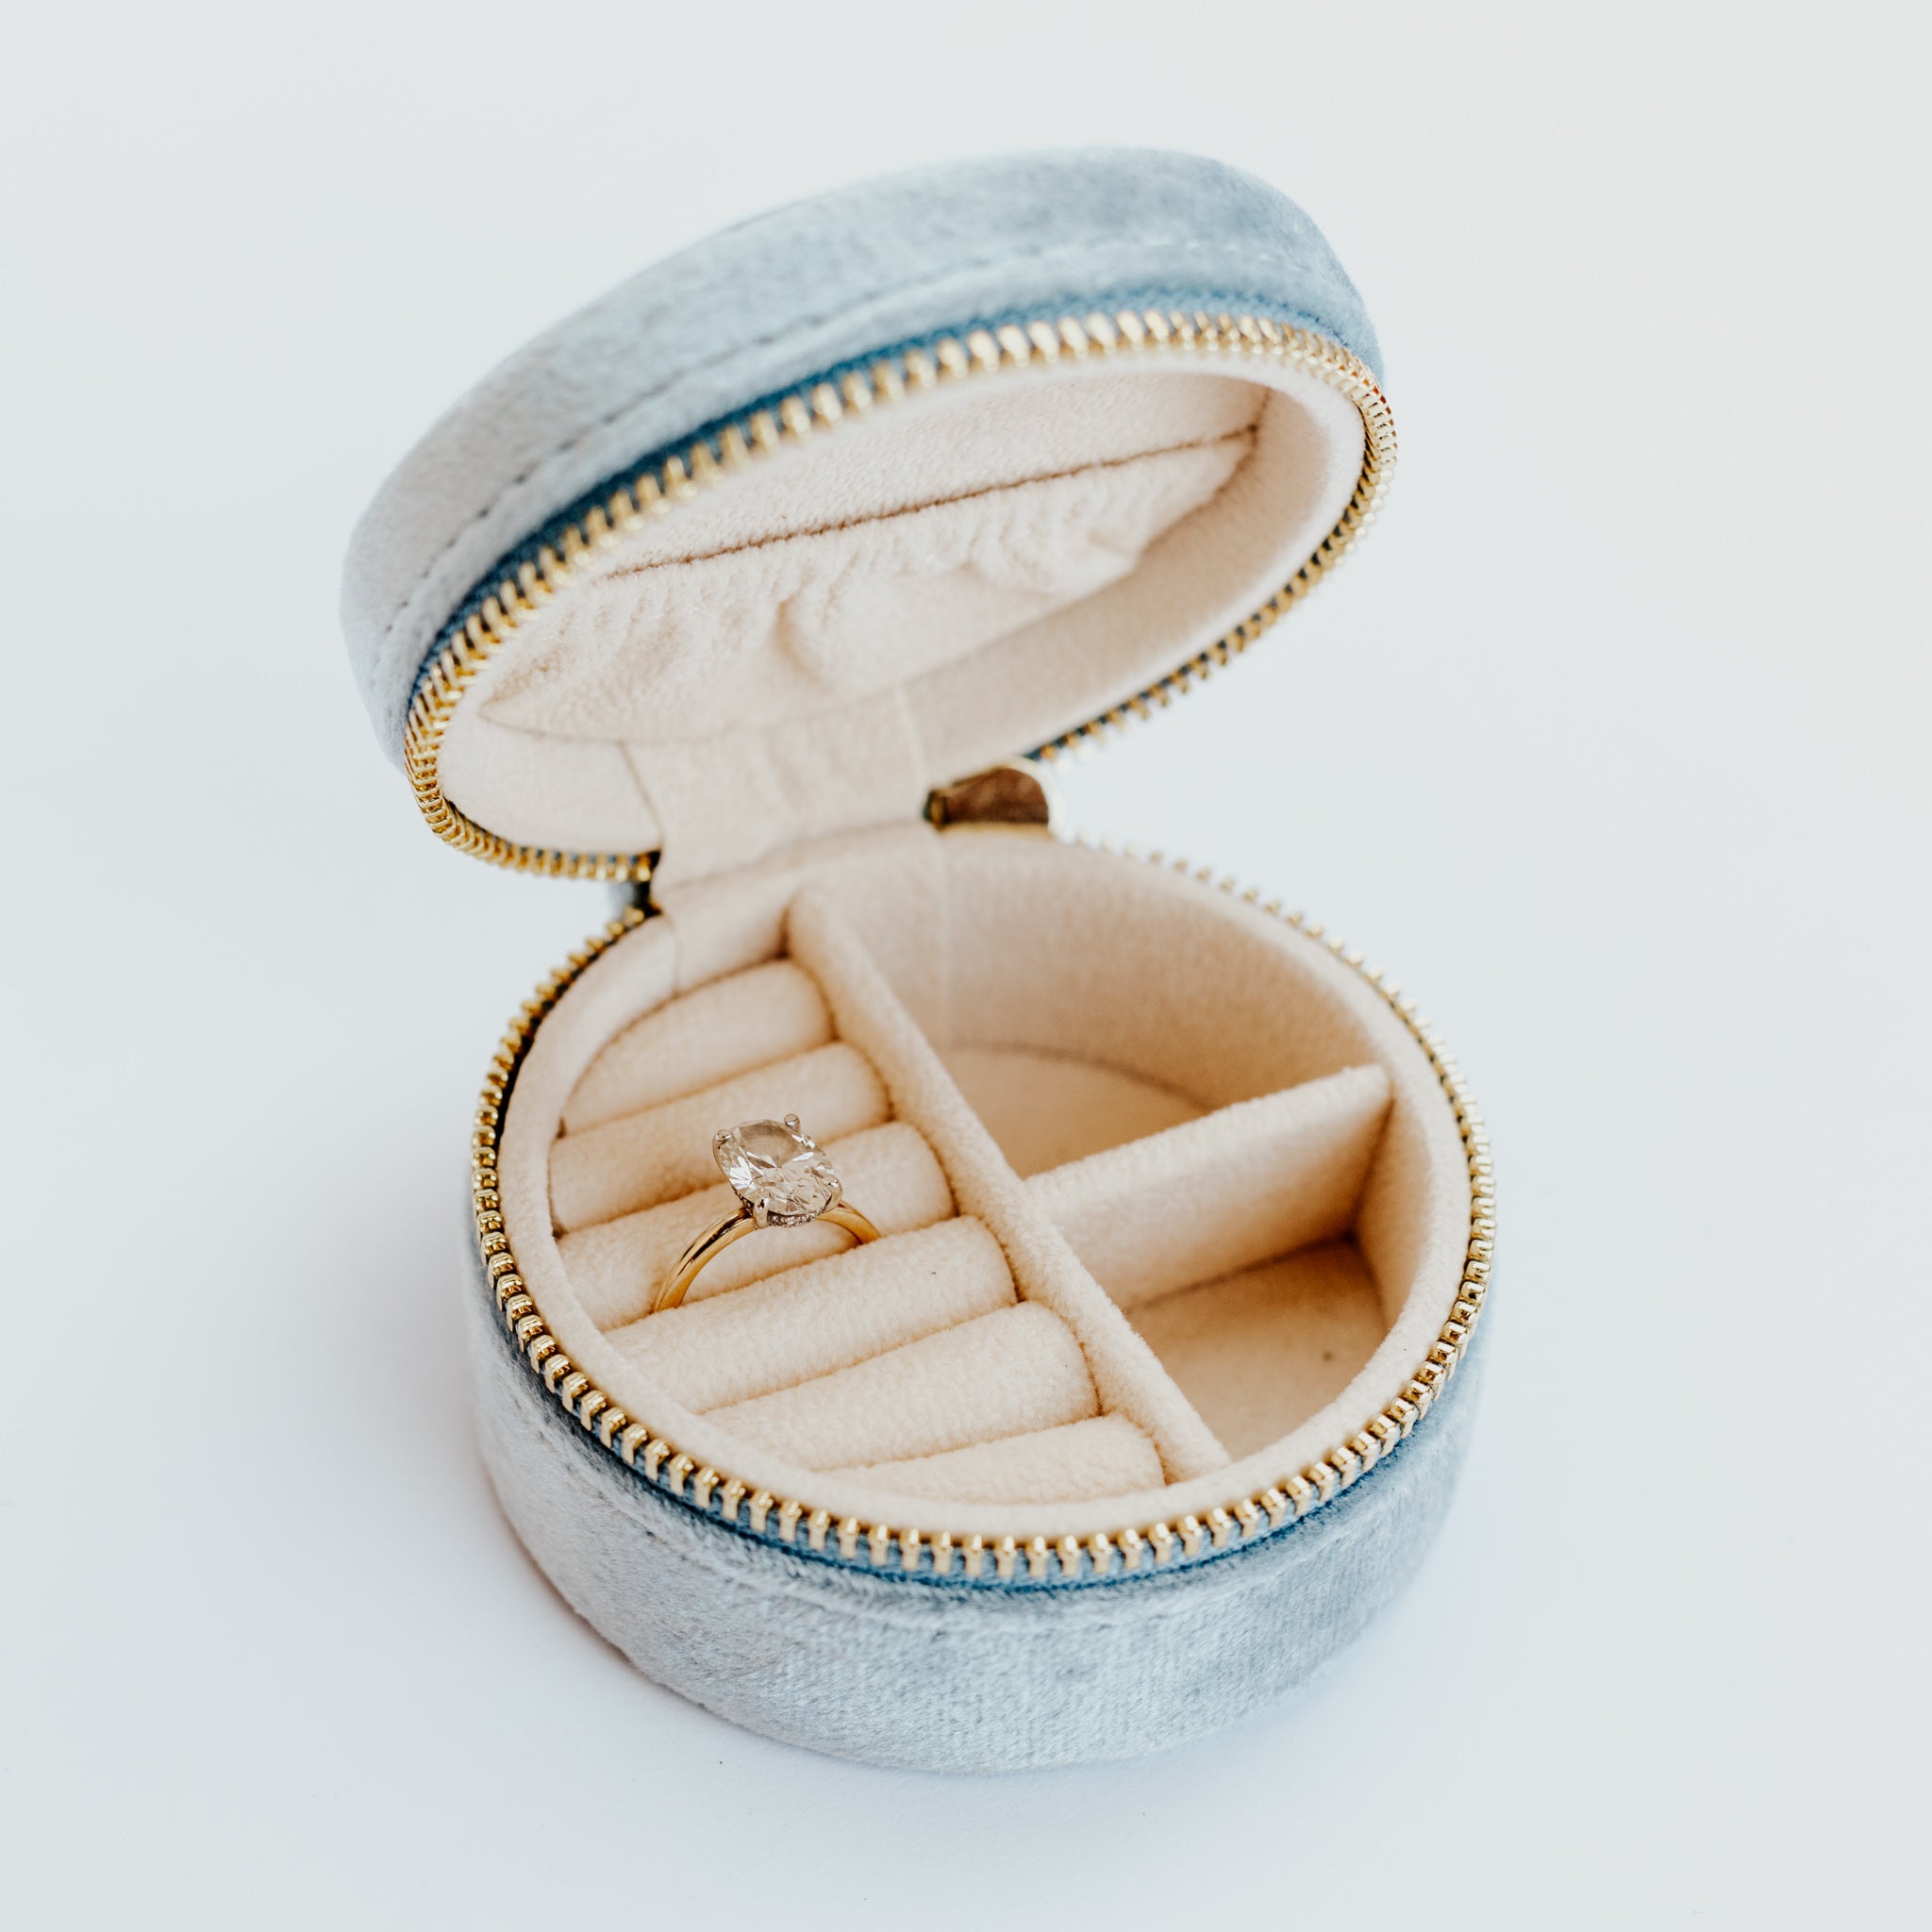 Light blue velvet jewelry travel case holding an oval engagement ring against a white background